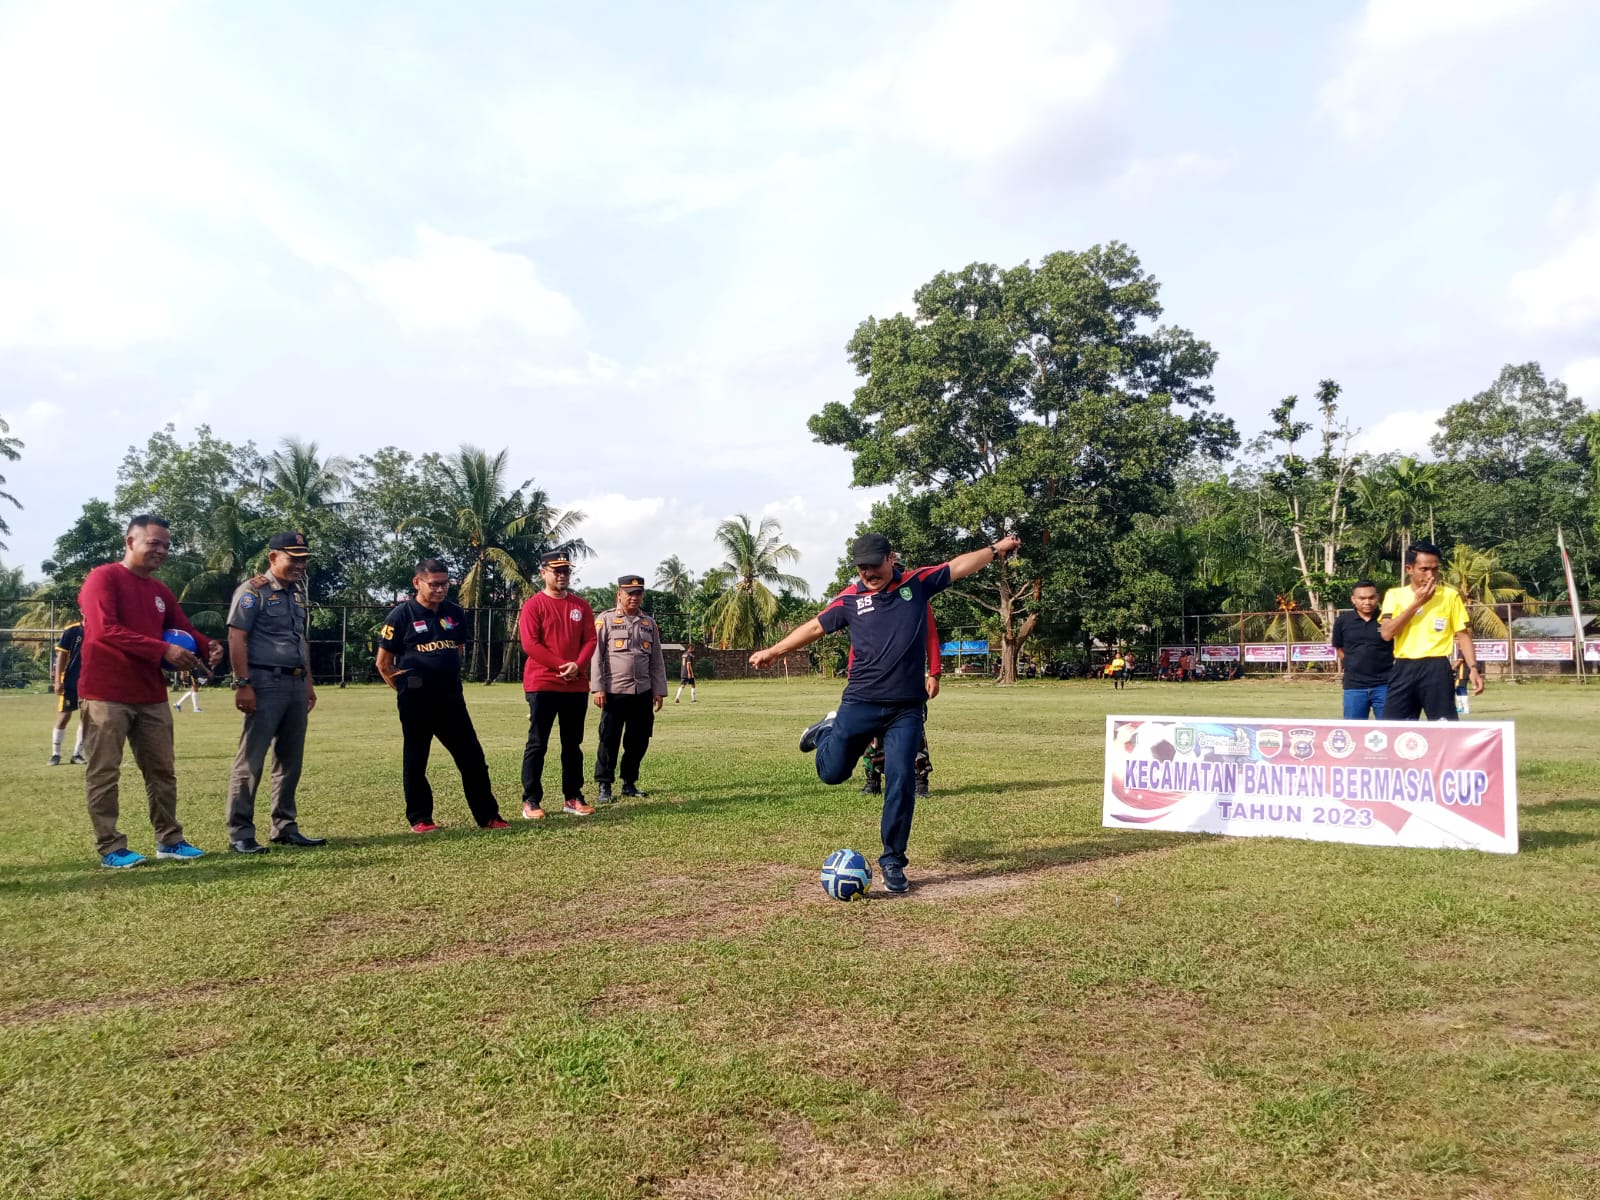 Wakili Bupati Bengkalis, Kadis Parbudpora Edi Sakura Buka Turnamen Sepak Bola Kecamatan Bantan Bermasa Cup Tahun 2023